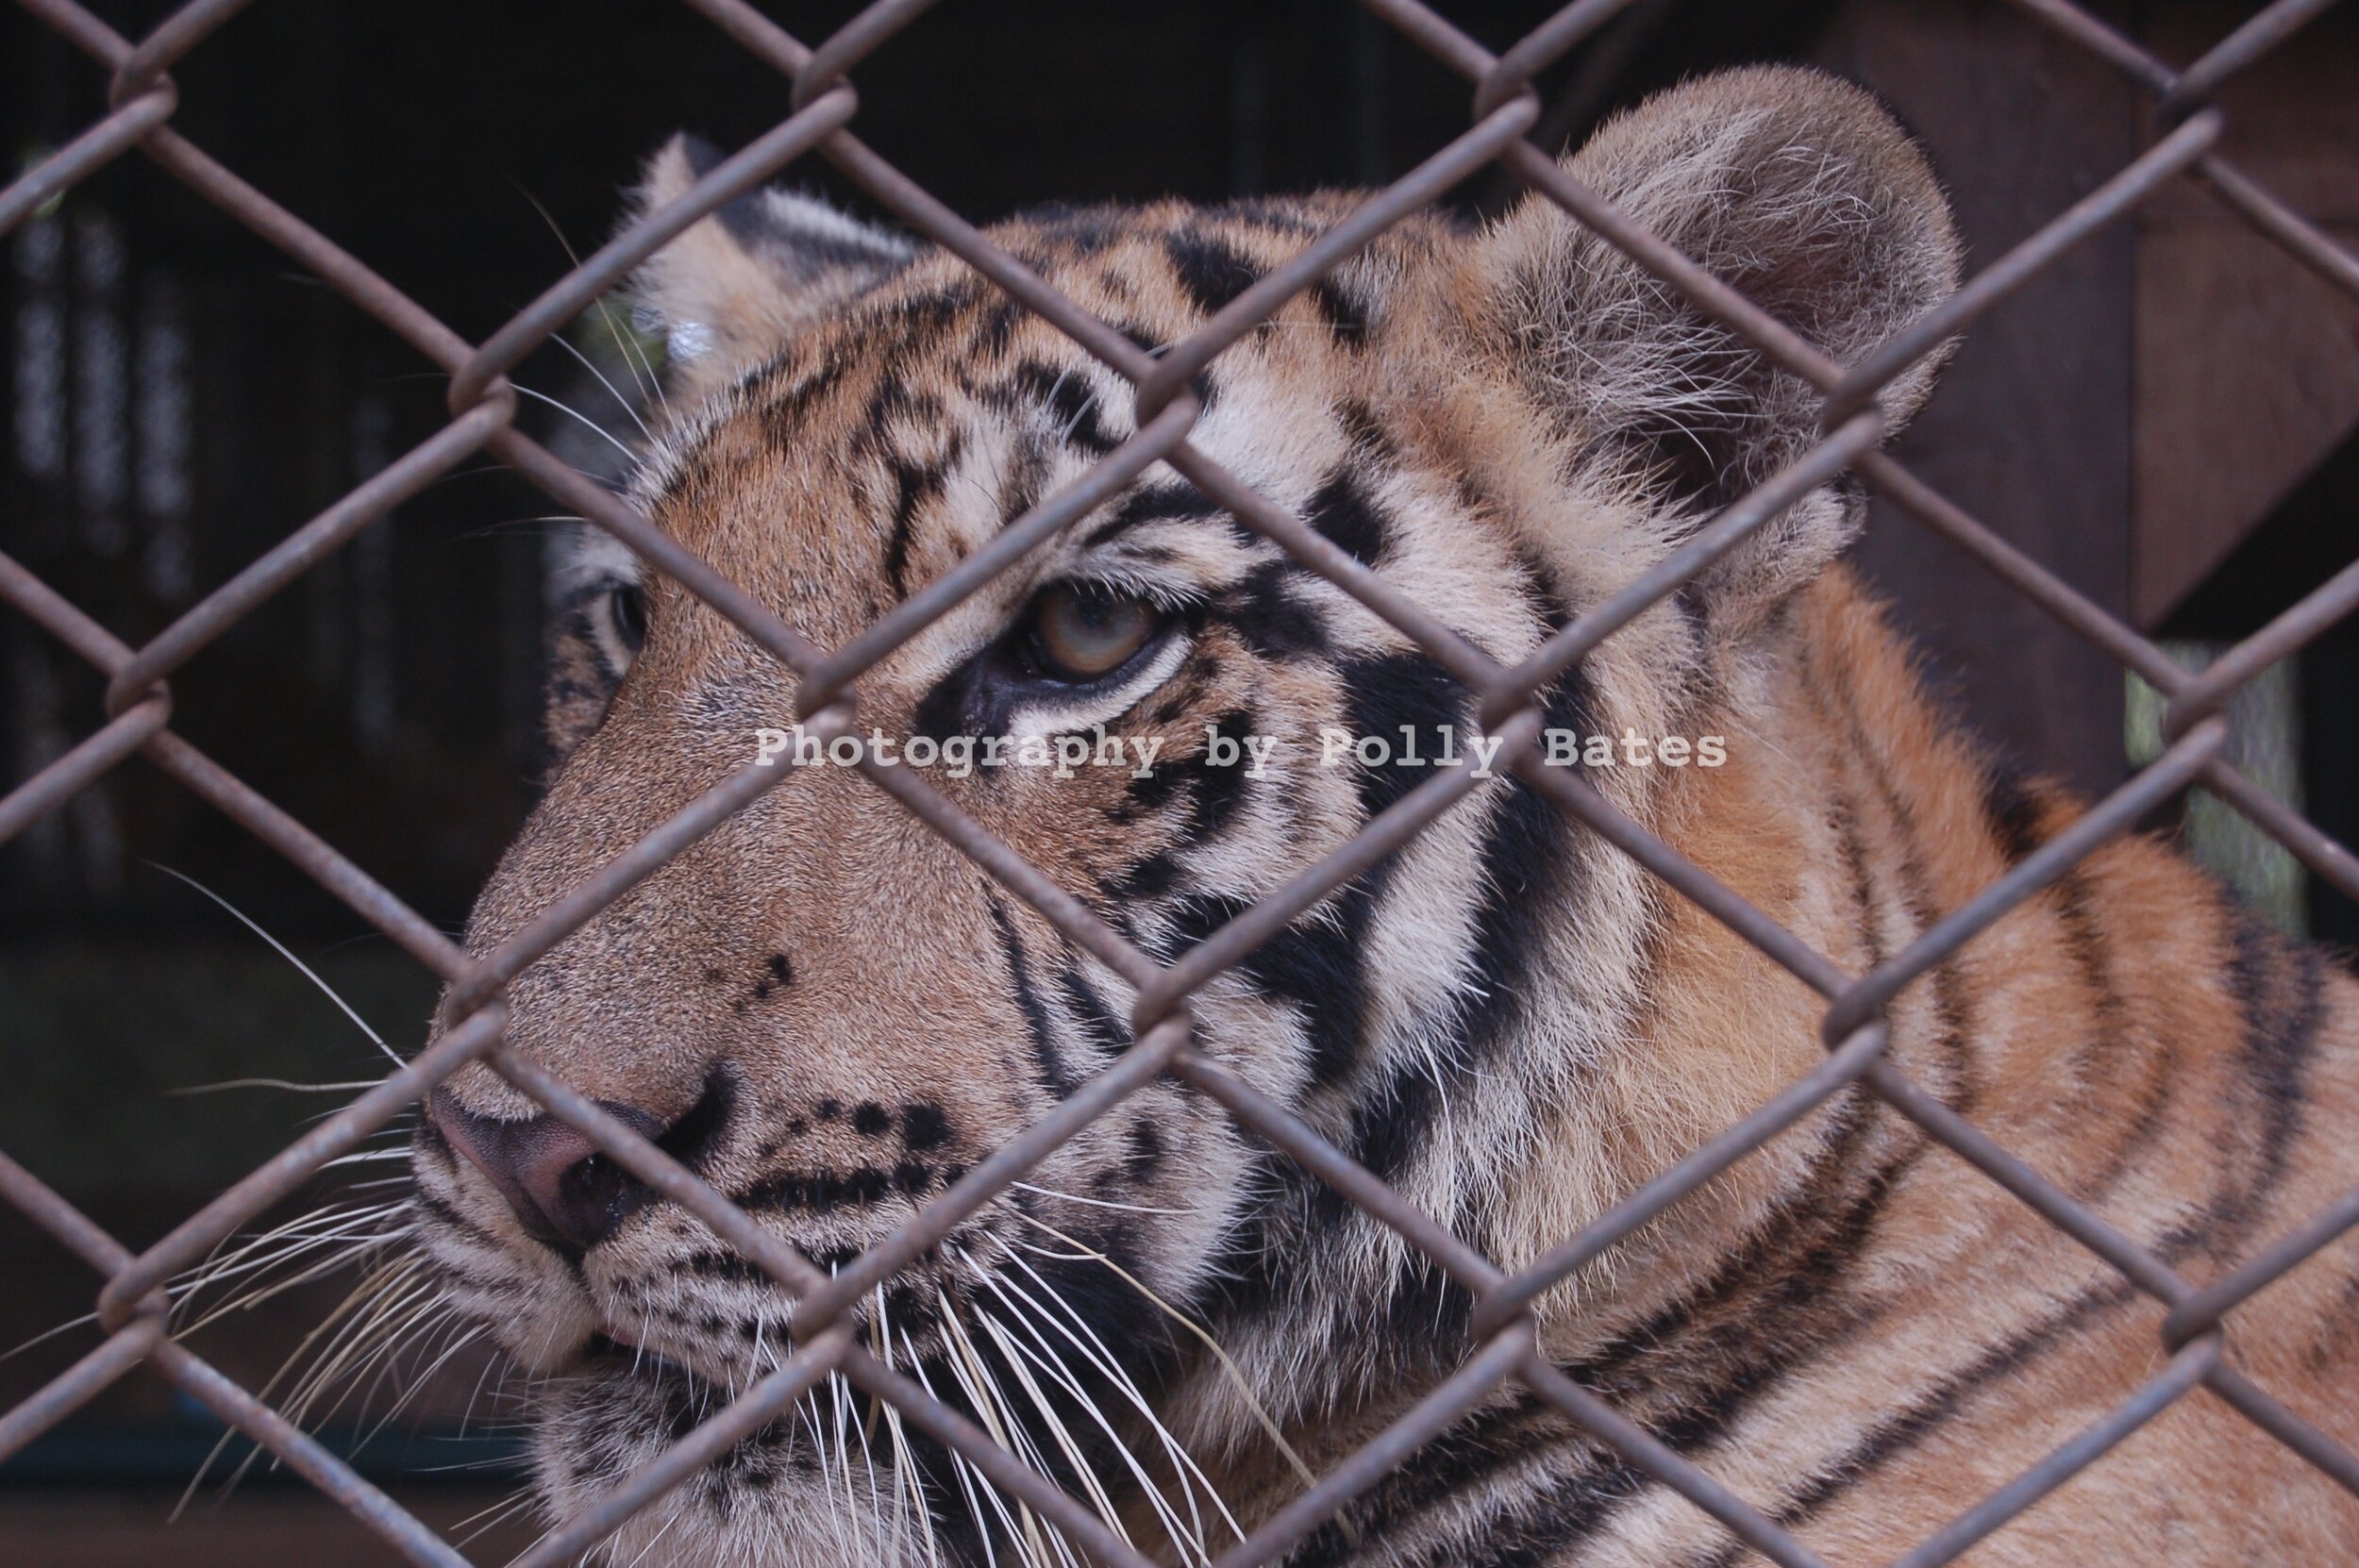 Polly Bates Caged Tiger Photography 1.jpg